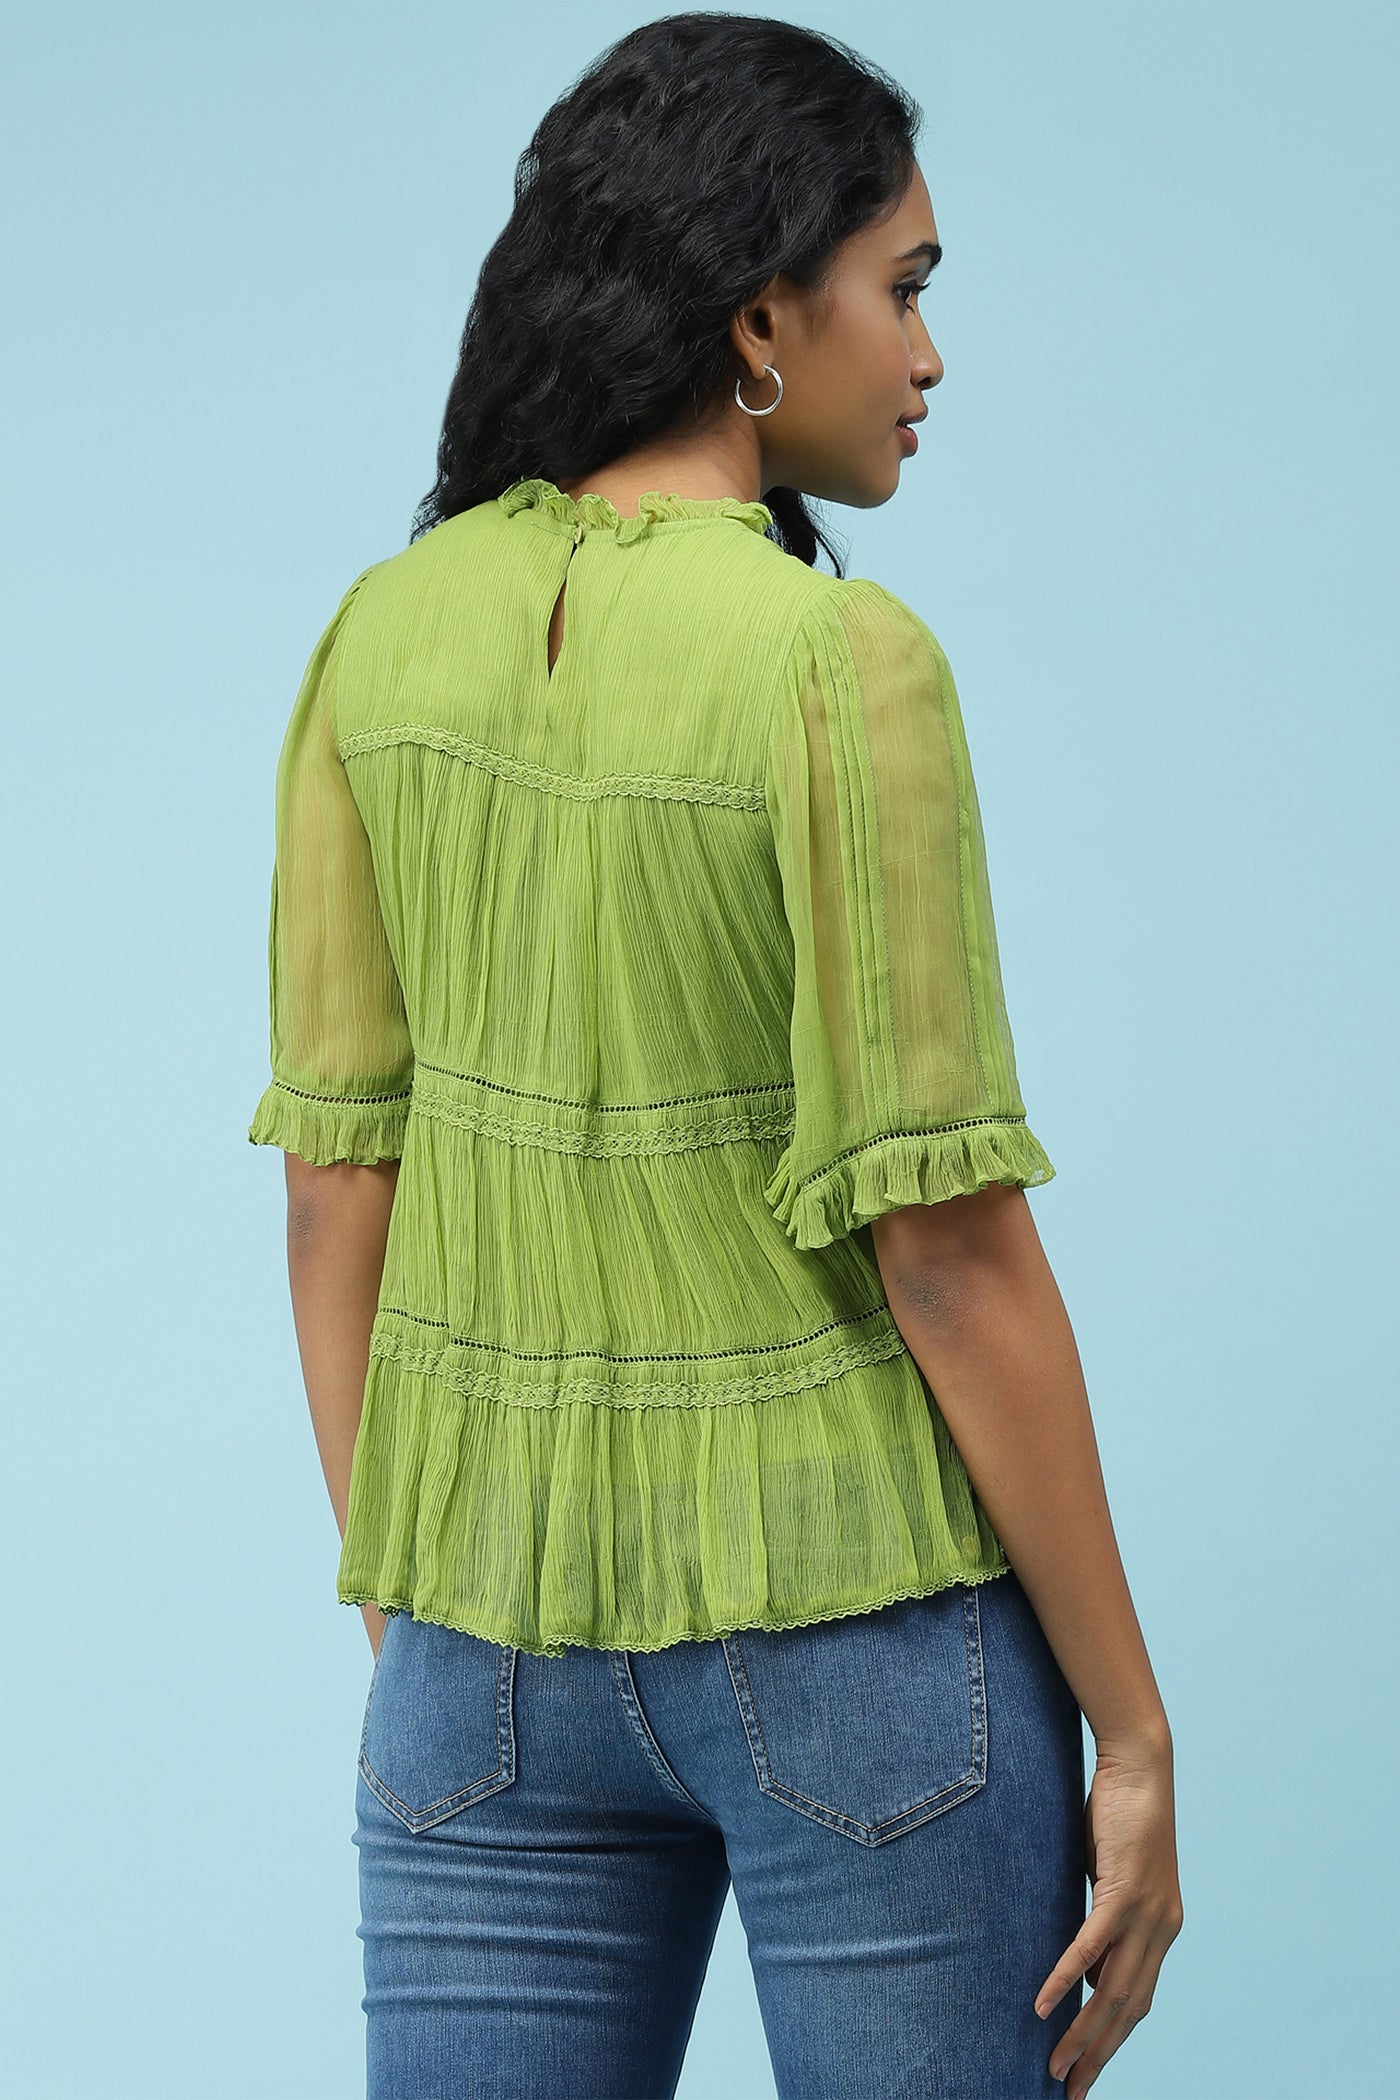 label ritu kumar Green Solid Top With Lace Inserts western  designer wear online shopping melange singapore